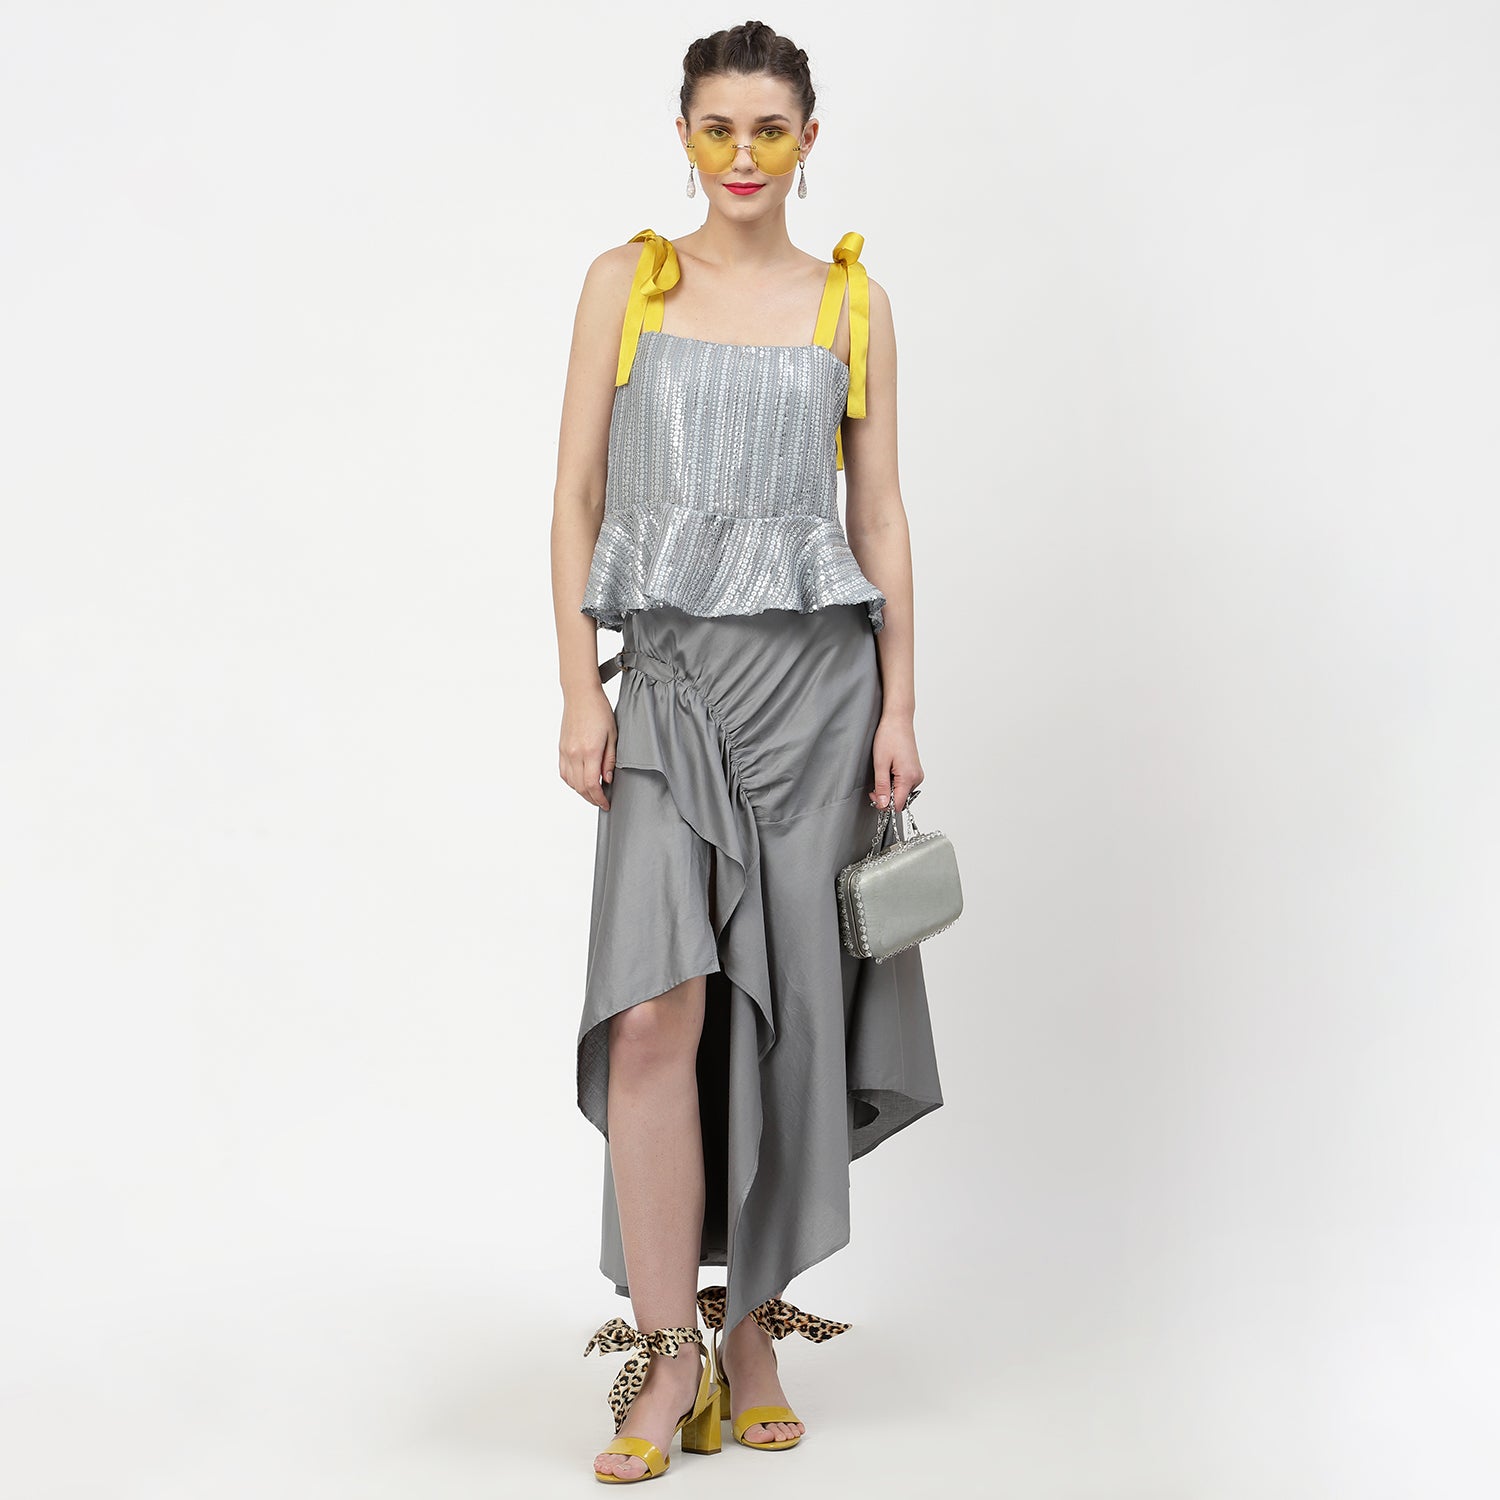 Grey Asymmetrical Skirt With Buckles